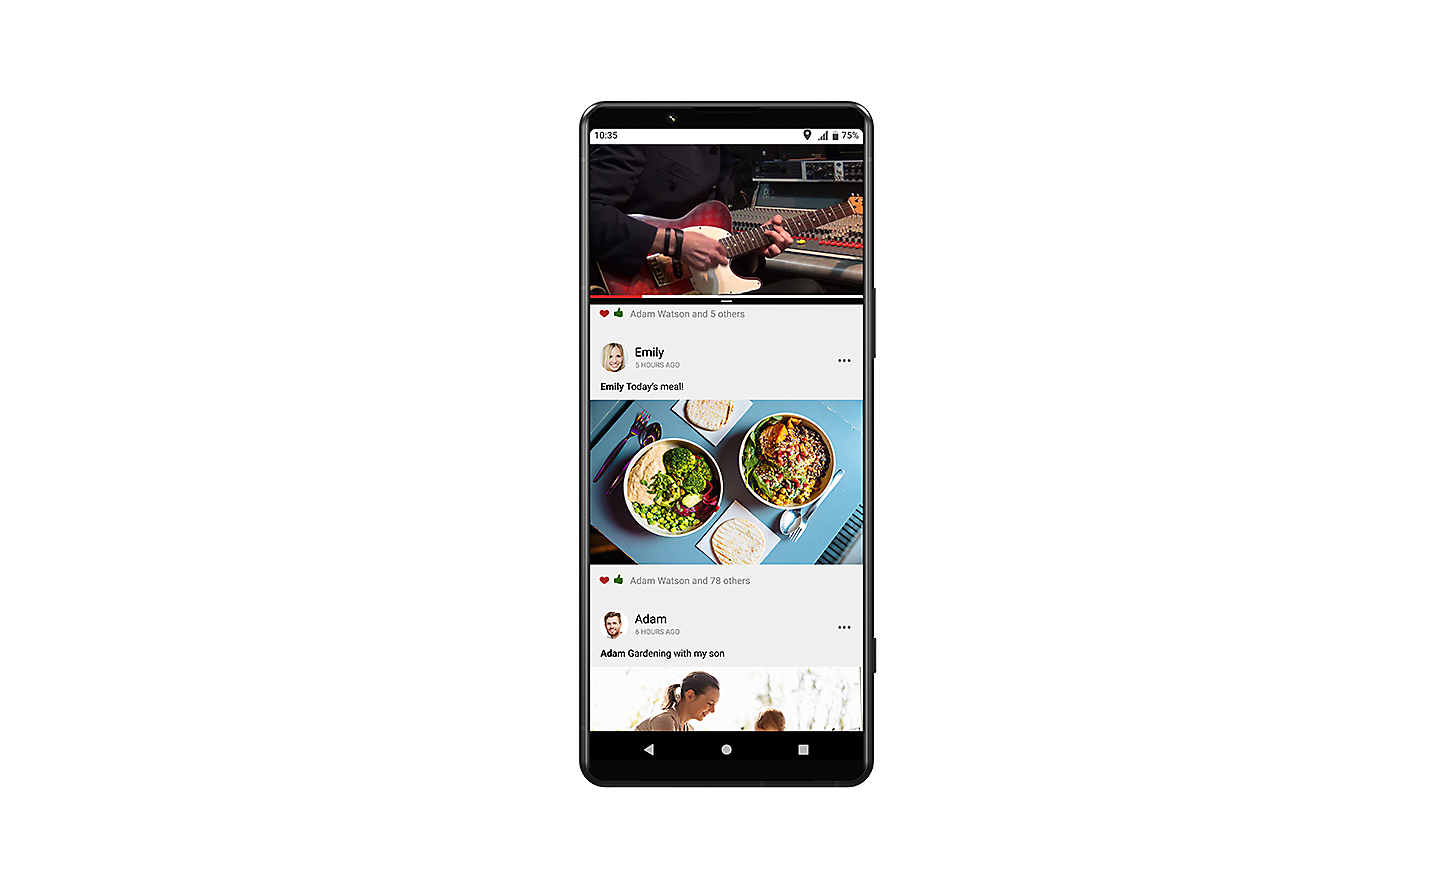 Xperia smartphone displaying Pop-up window UI